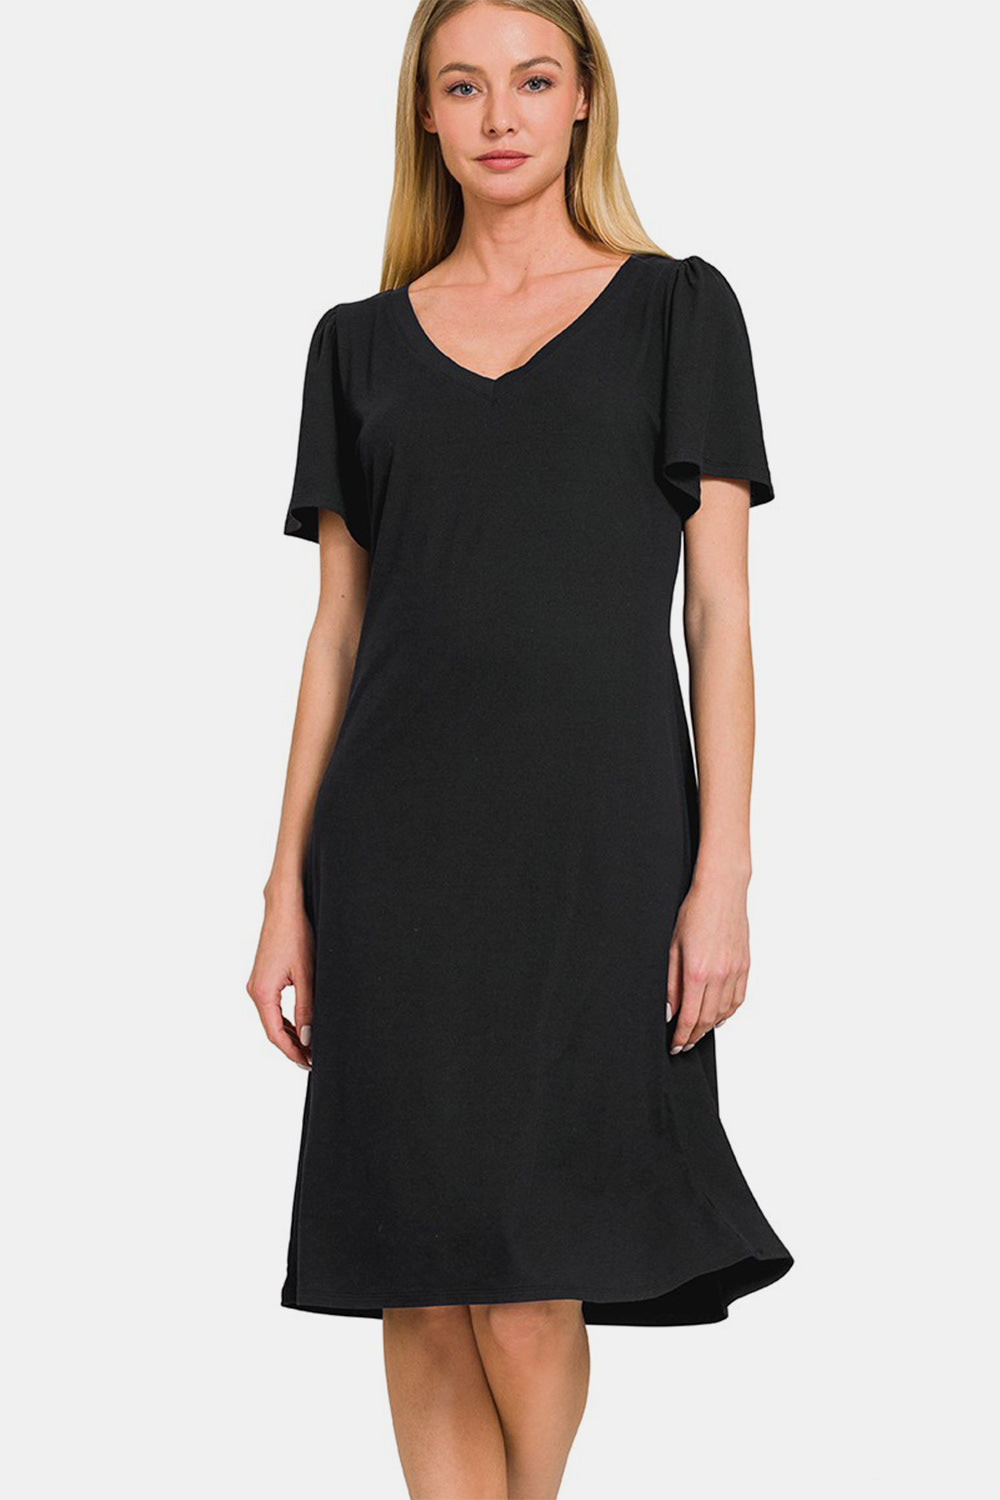 Zenana Black V-Neck Short Sleeve Dress Black Trendsi